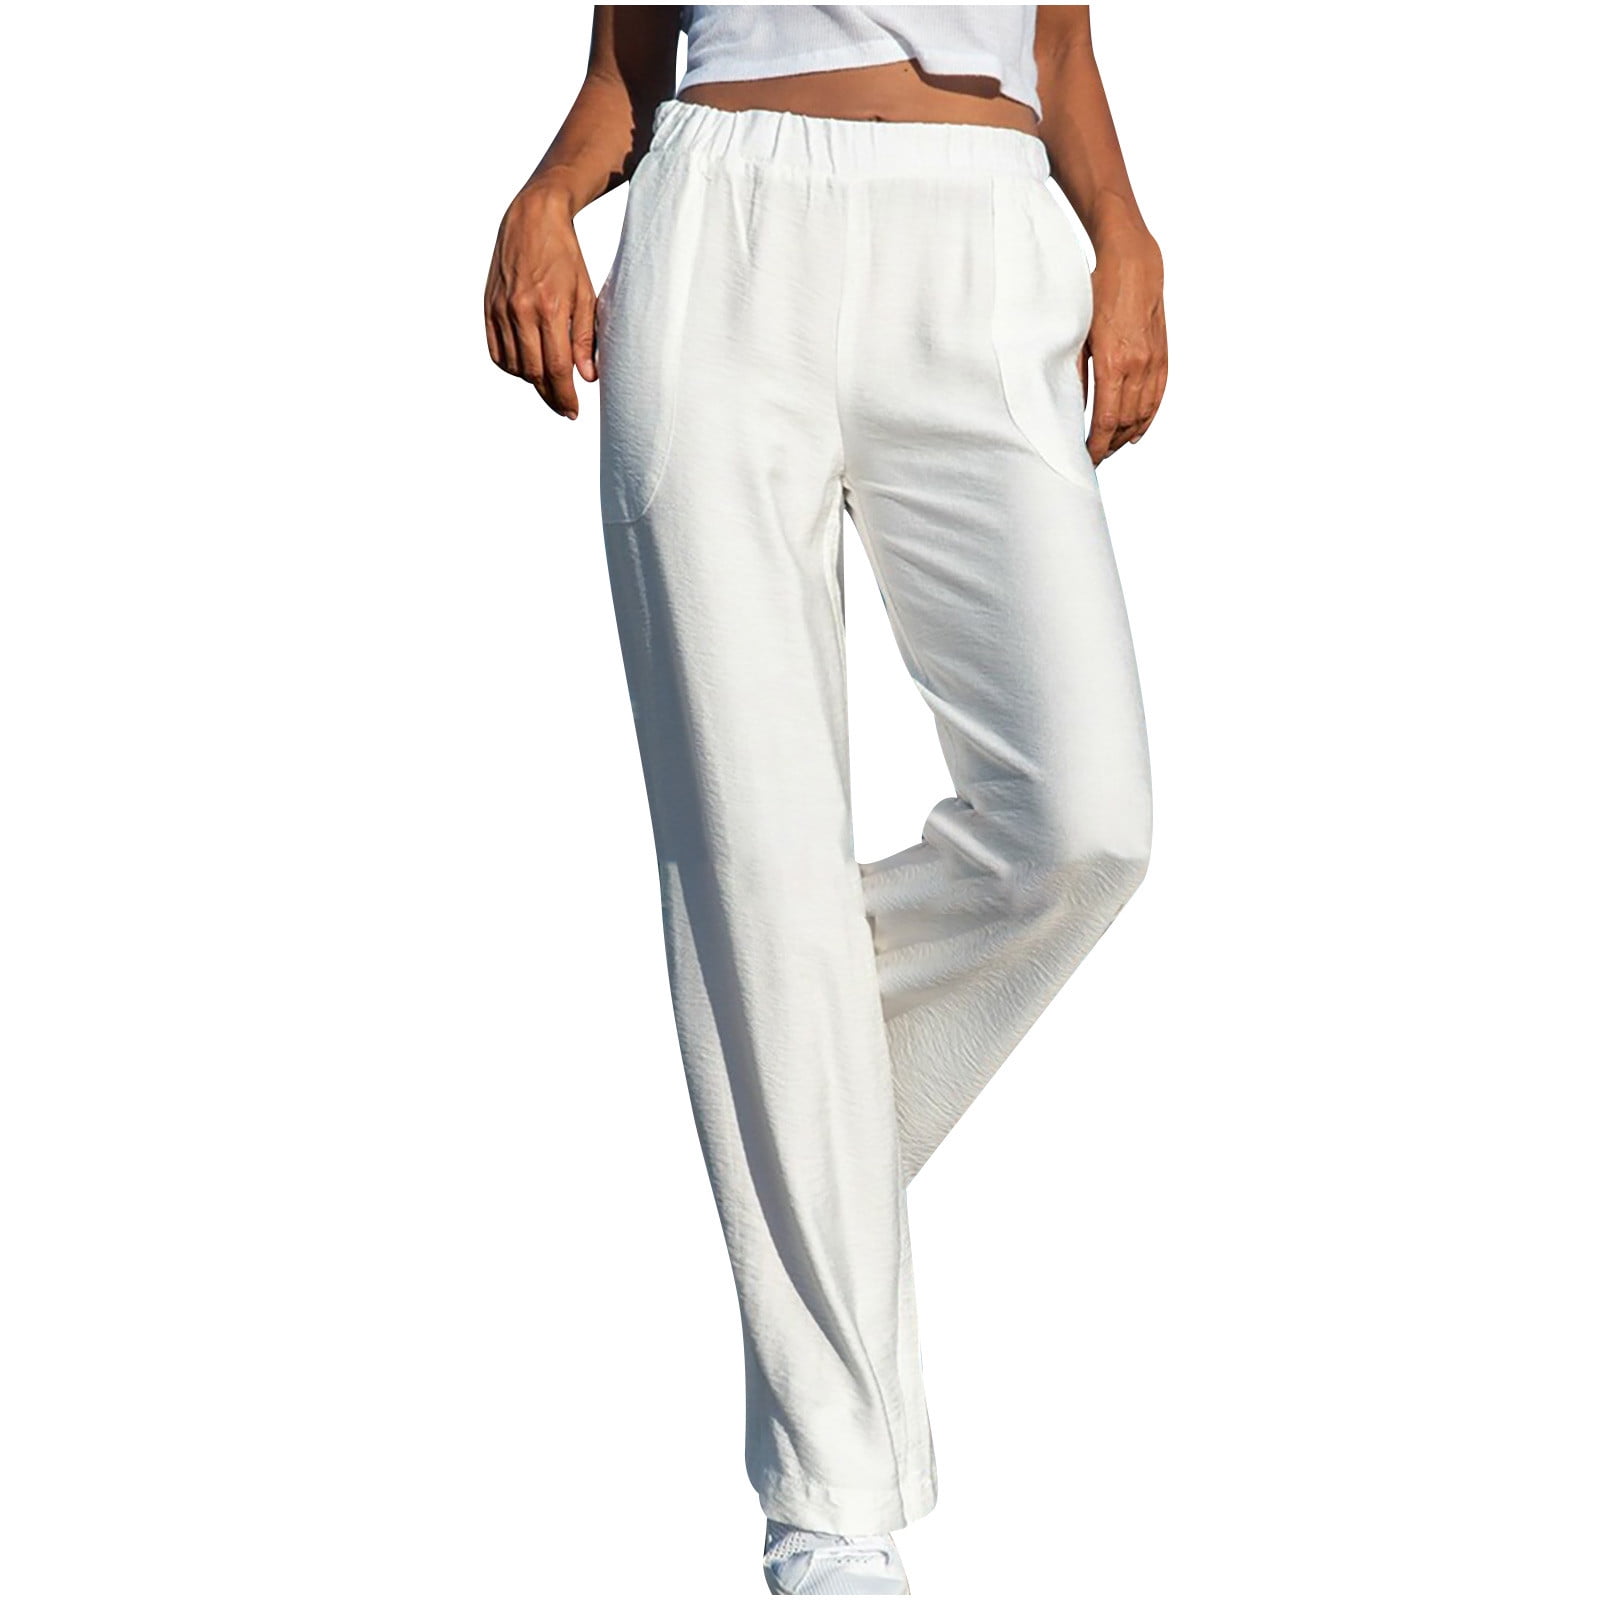 BUIgtTklOP Pants for Women Casual Solid Cotton Linen Drawstring Elastic  Waist Long Wide Leg Pants 